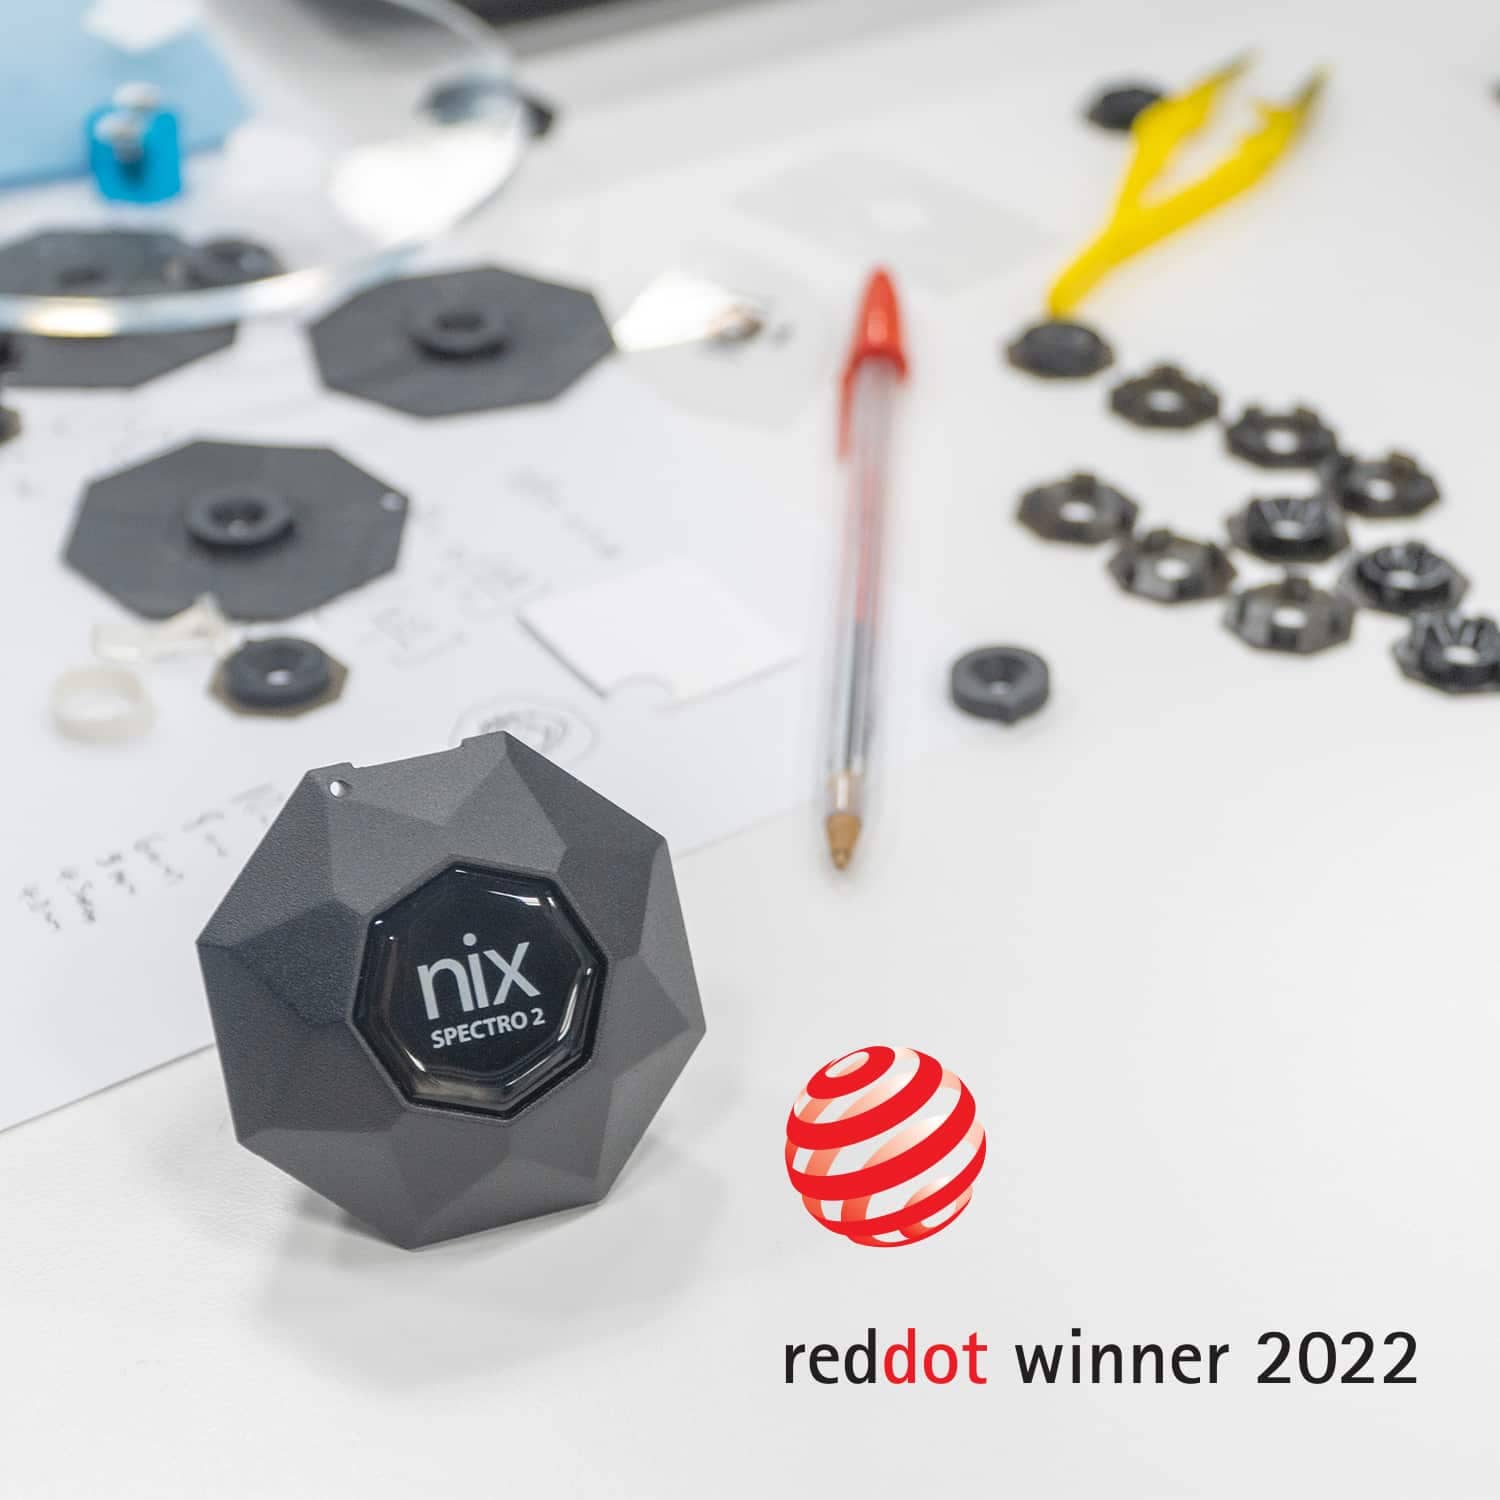 Nix Spectro 2 with Red Dot Design Award logo